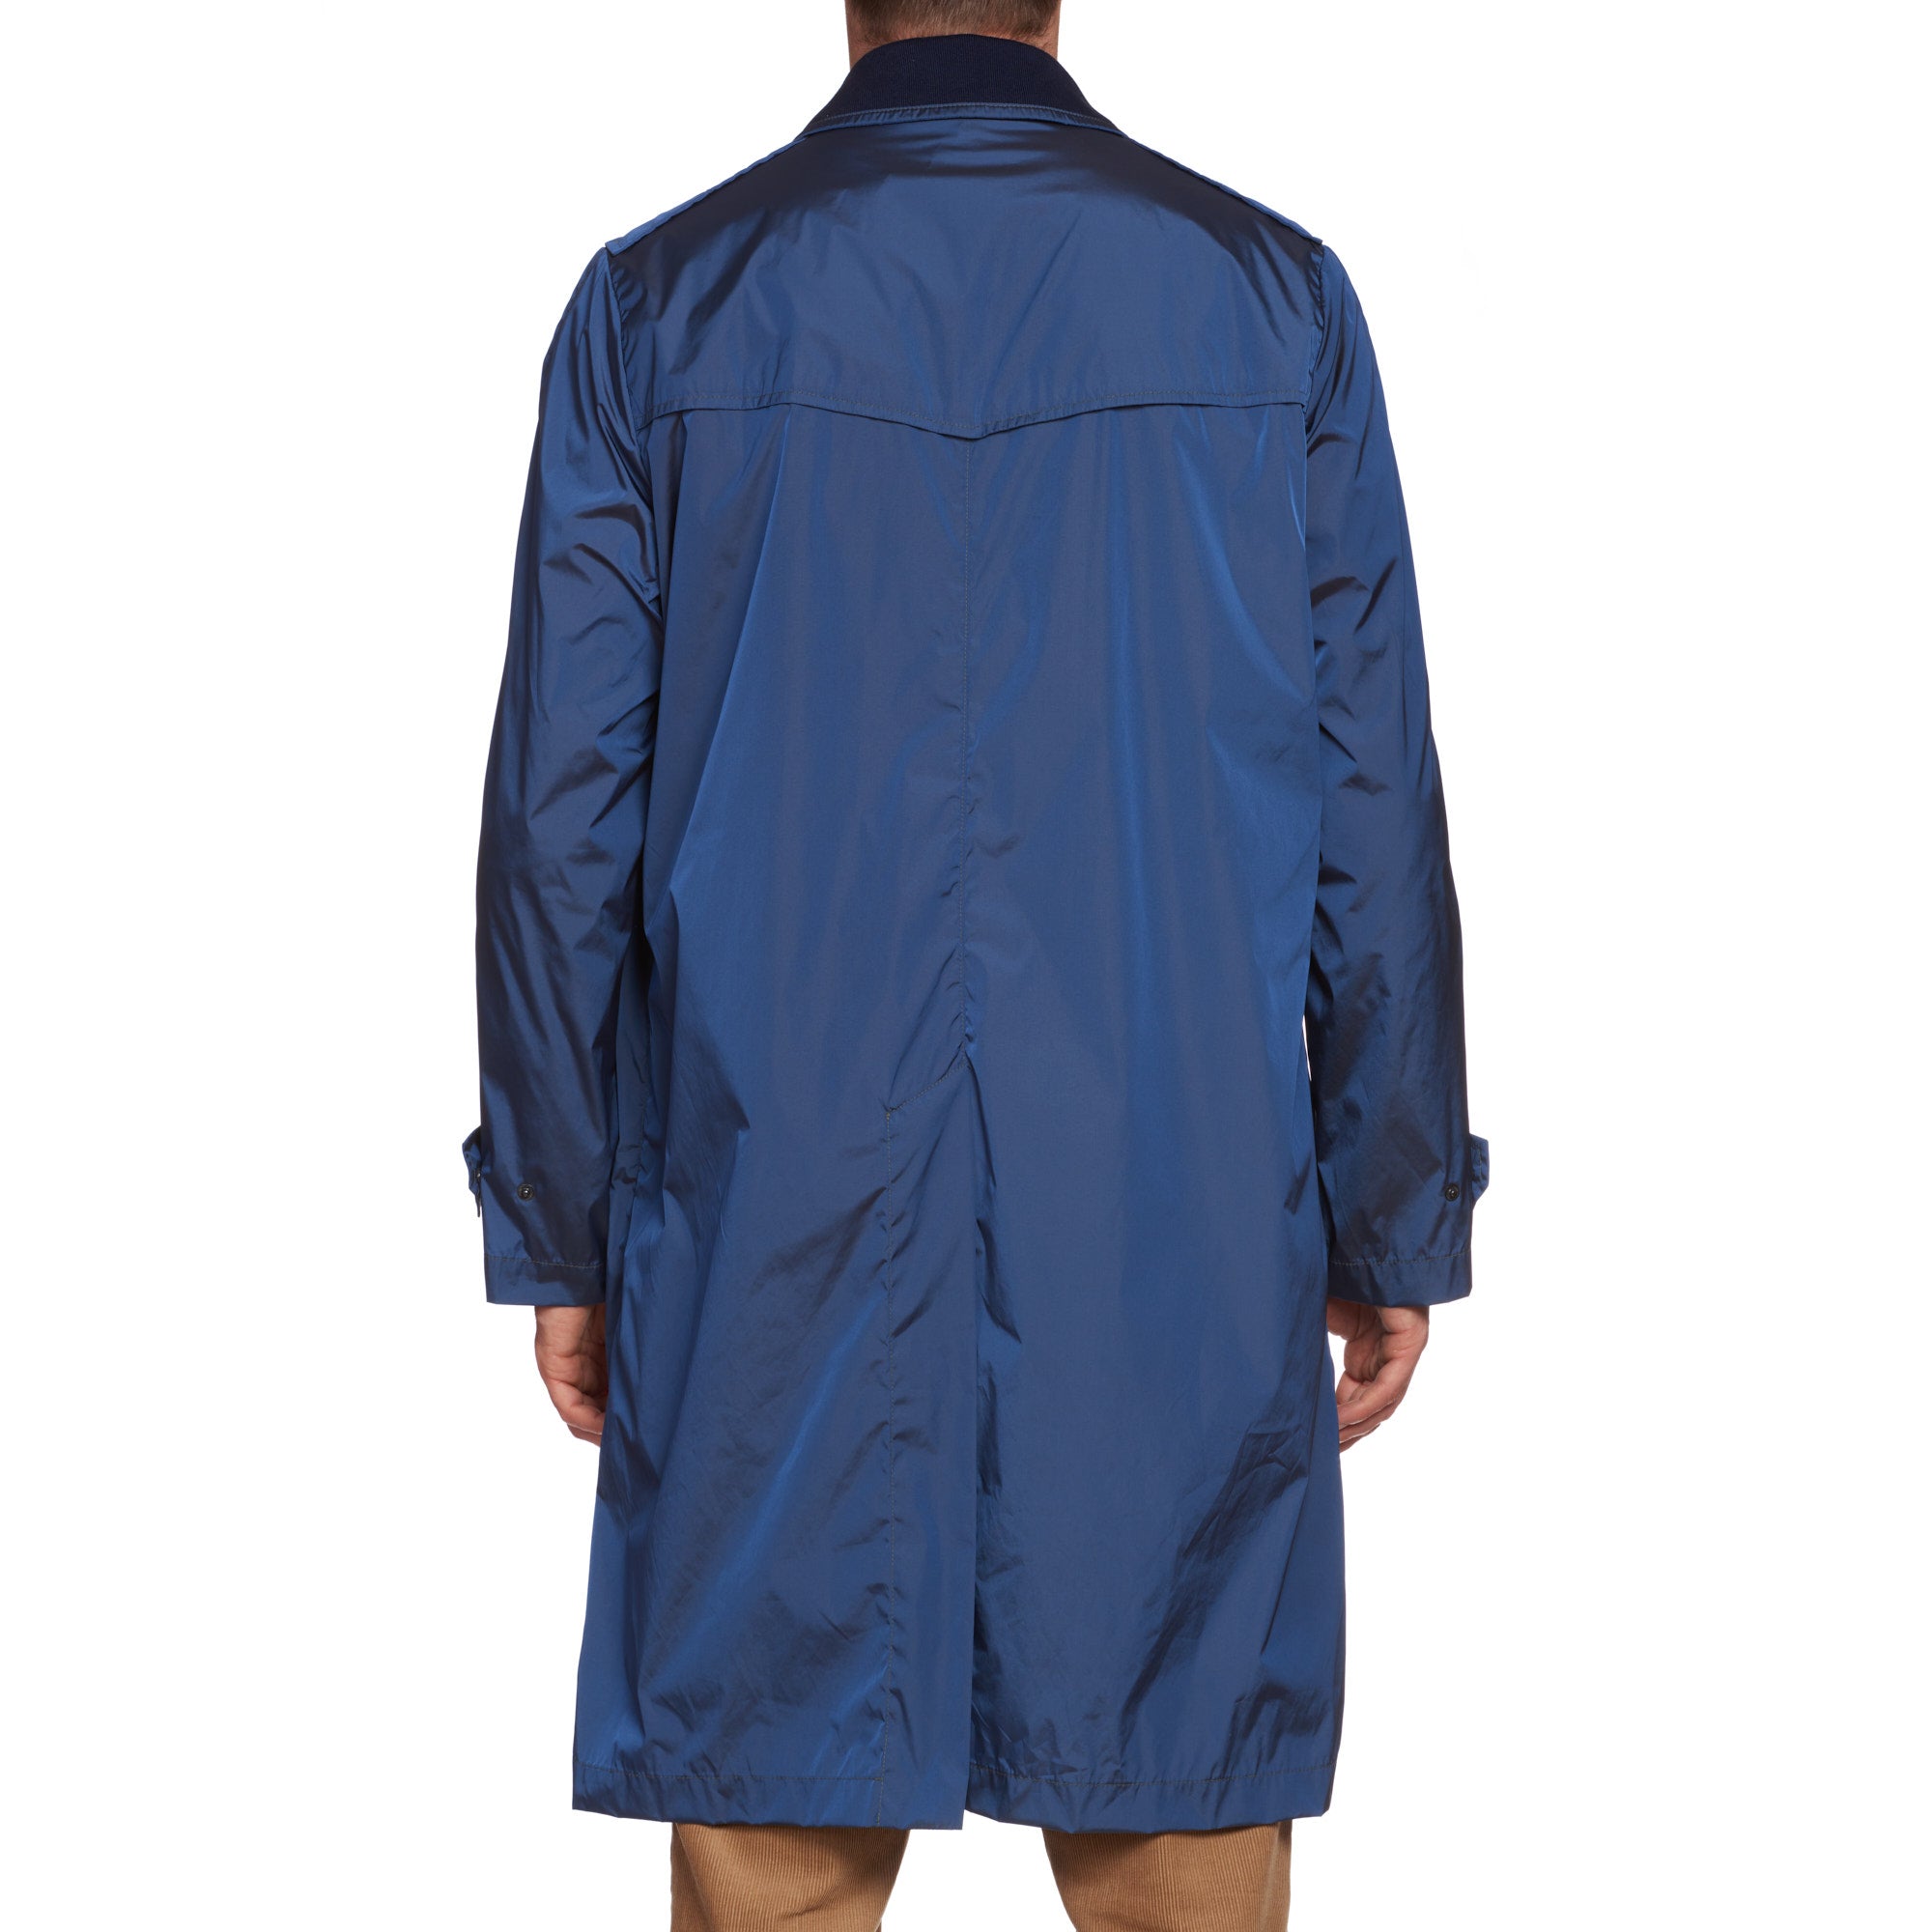 BOGLIOLI Milano "Wear" Navy Blue Unlined Lightweight Rain Coat EU 52 NEW US 42